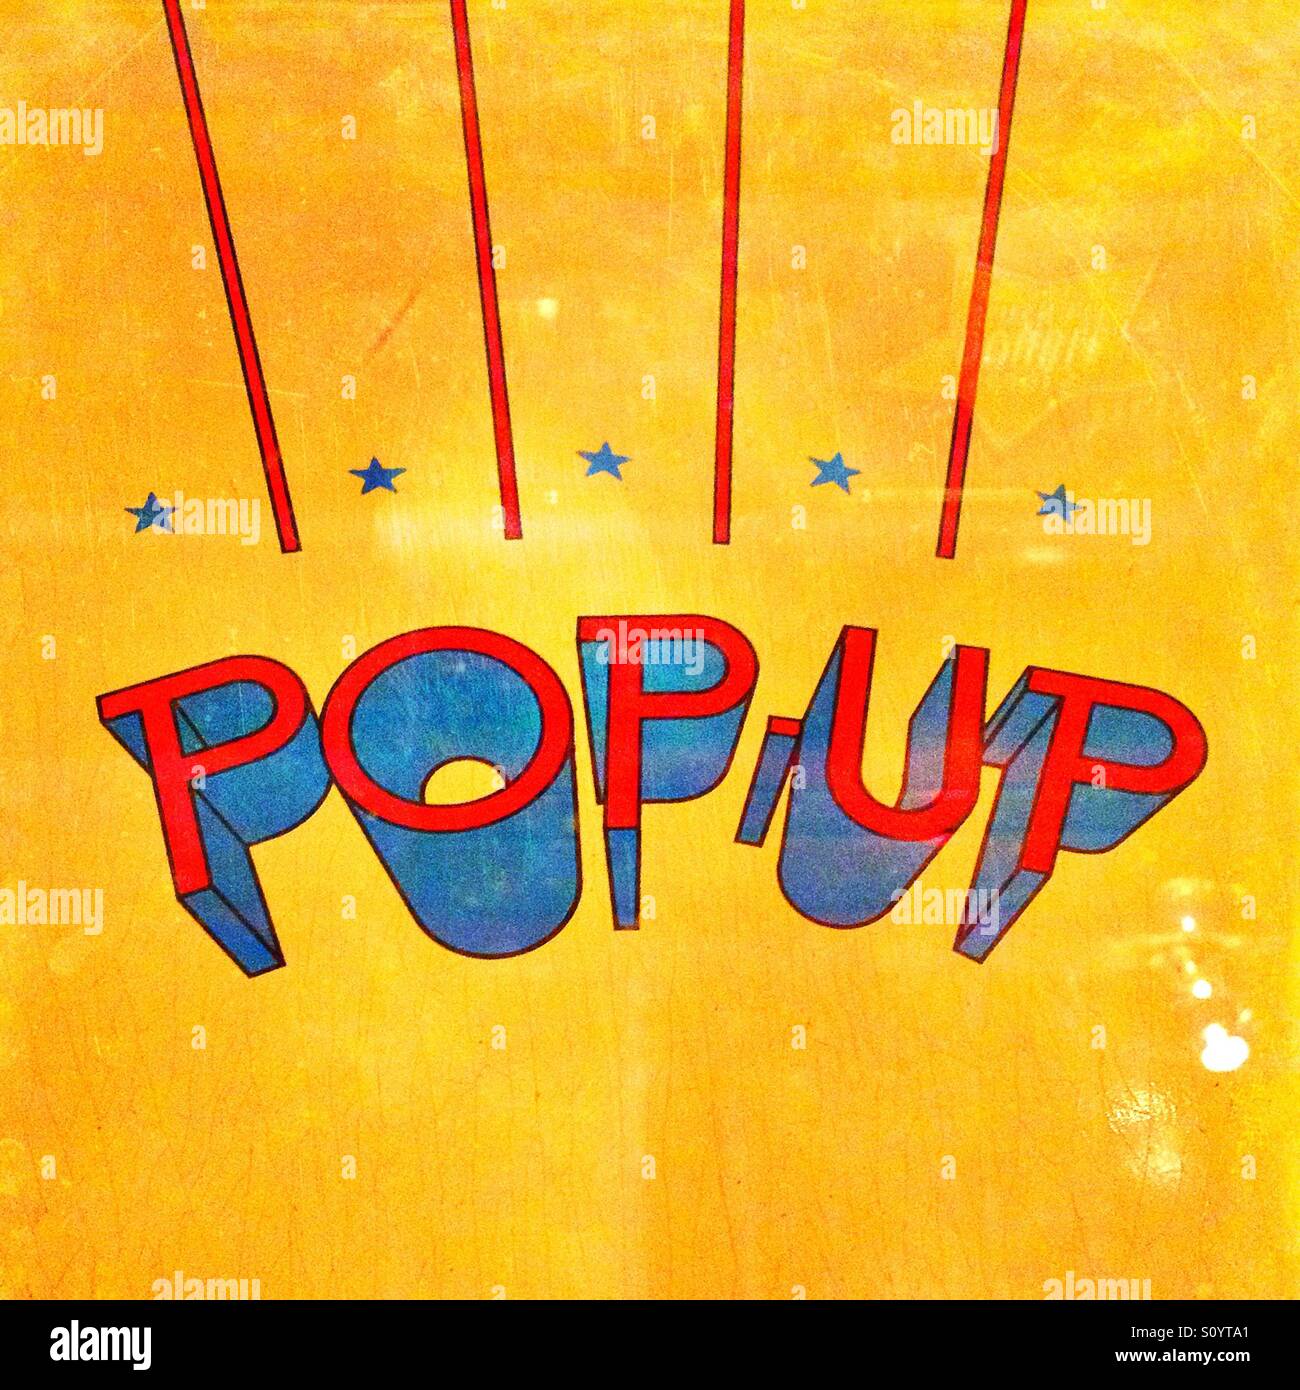 Retro style pop-up sign Stock Photo